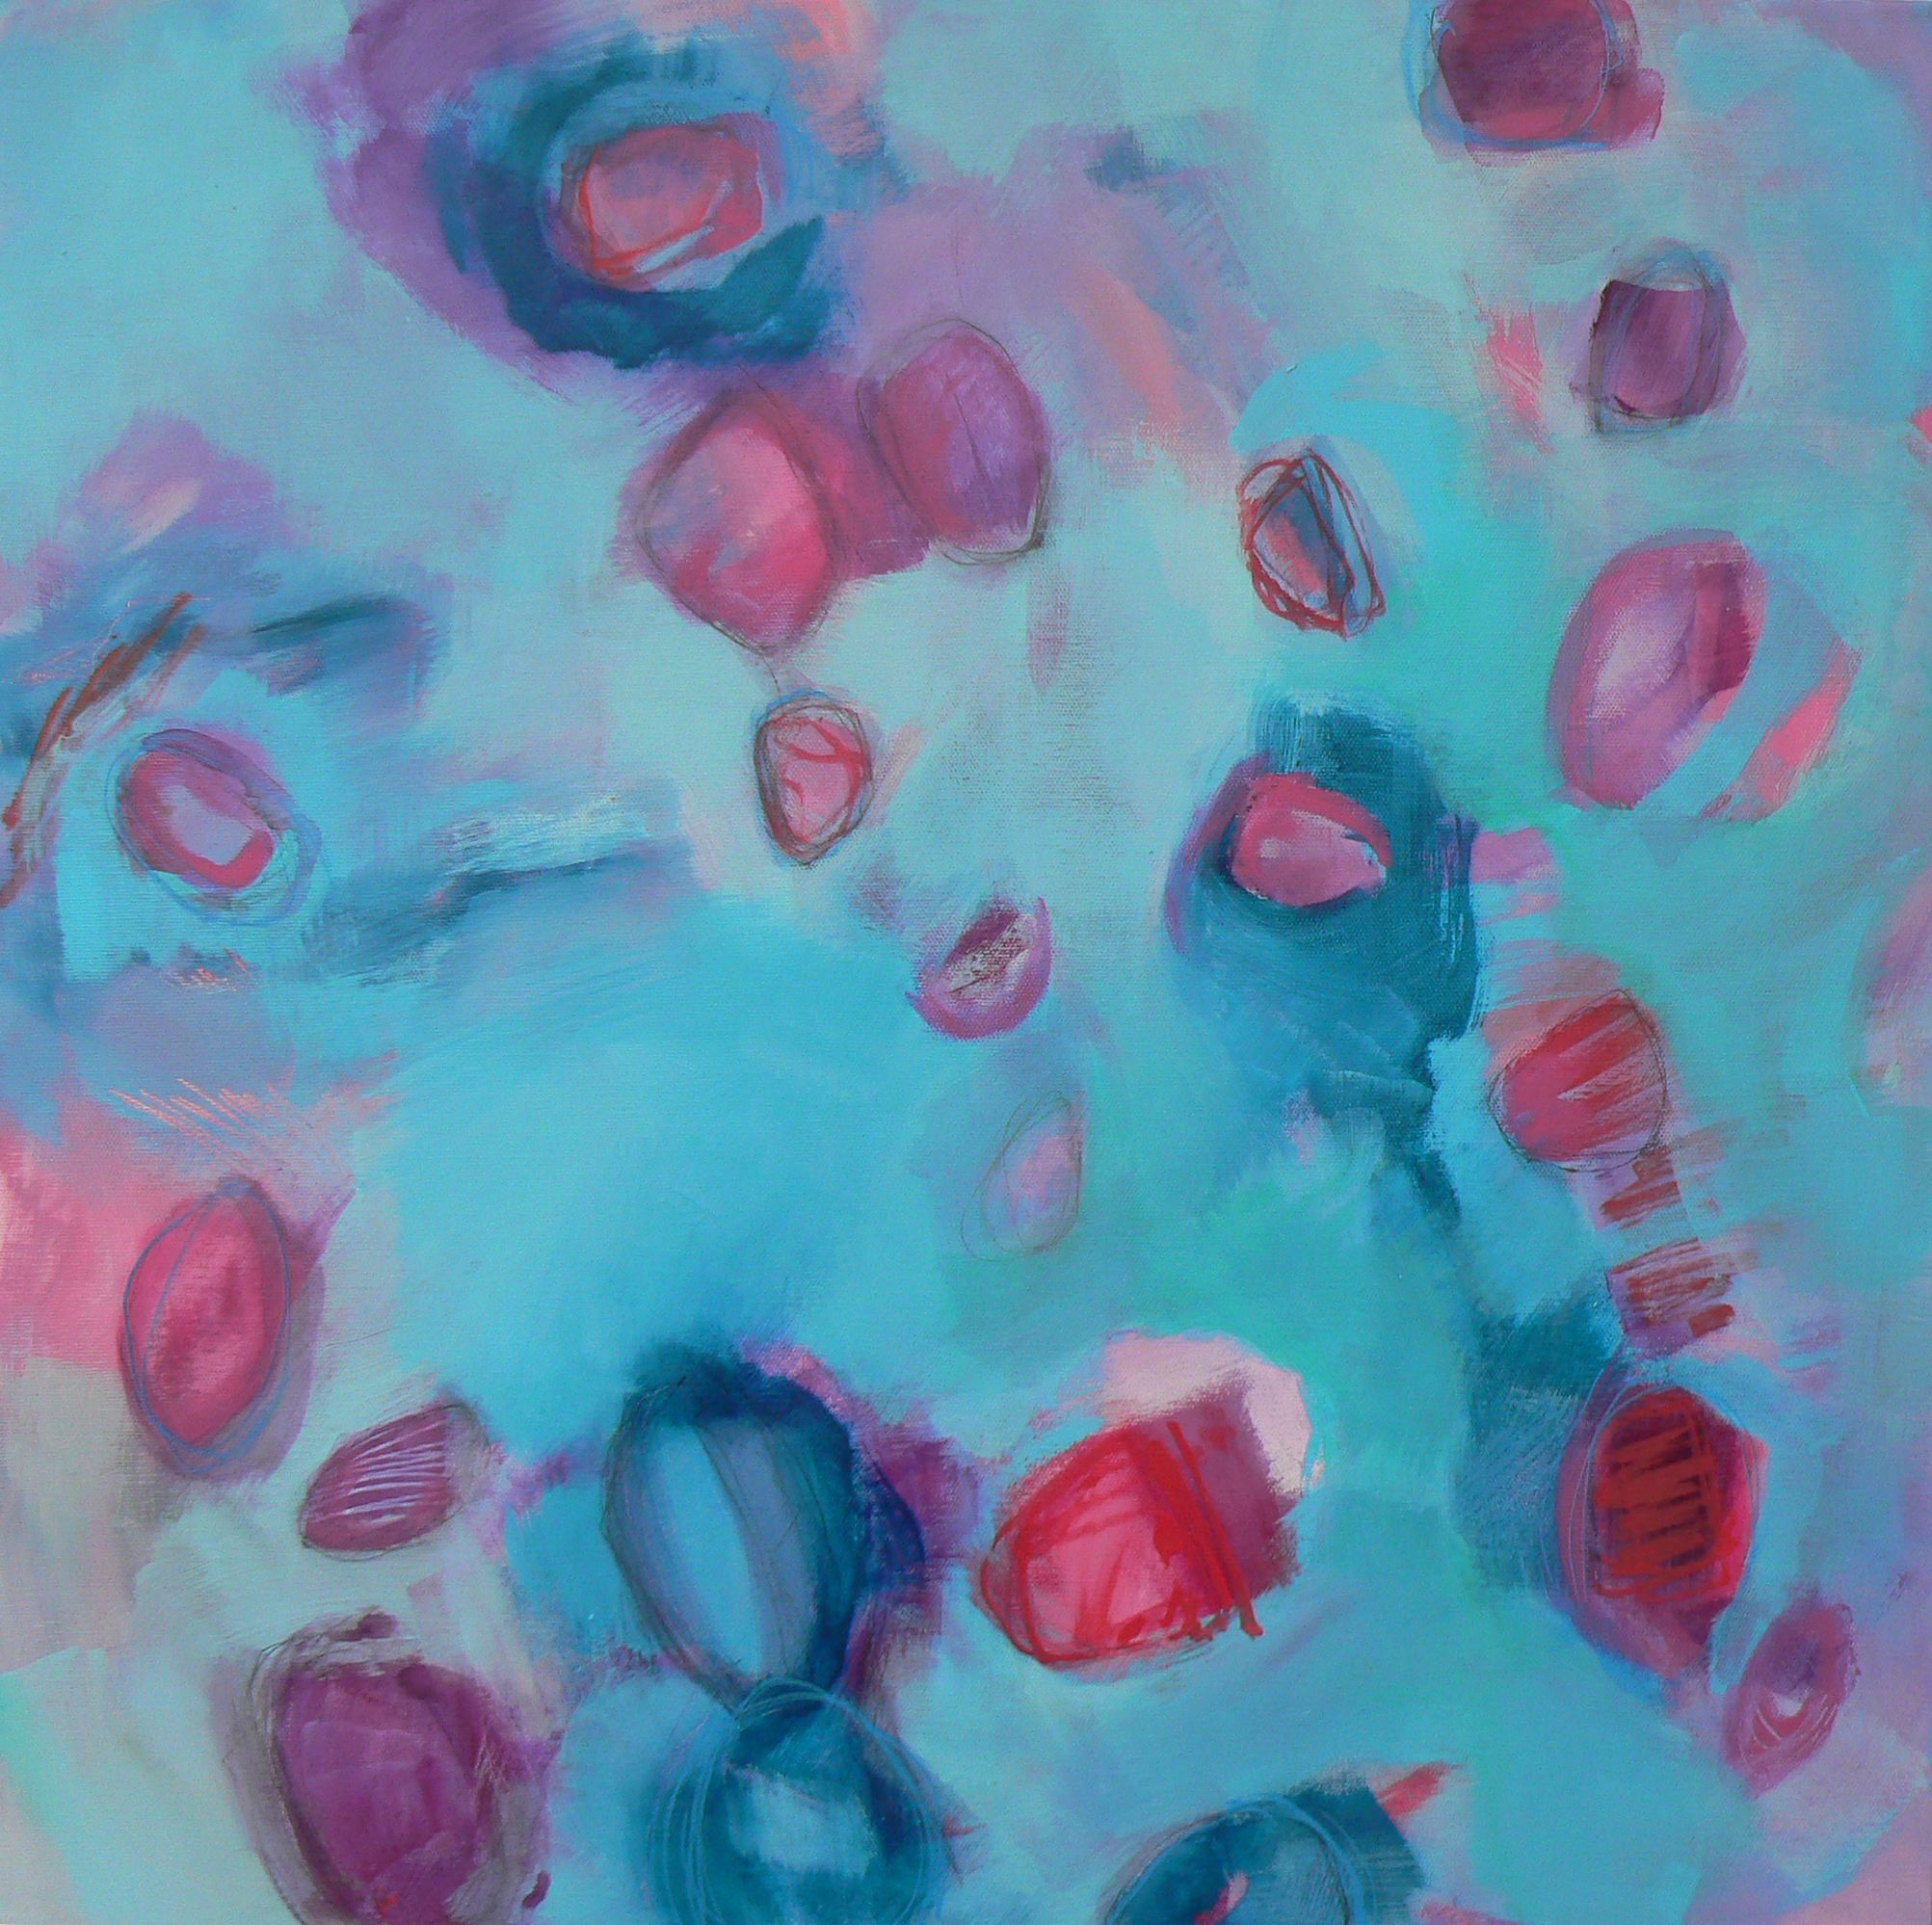 cherry blossom rain - original abstract painting on canvas